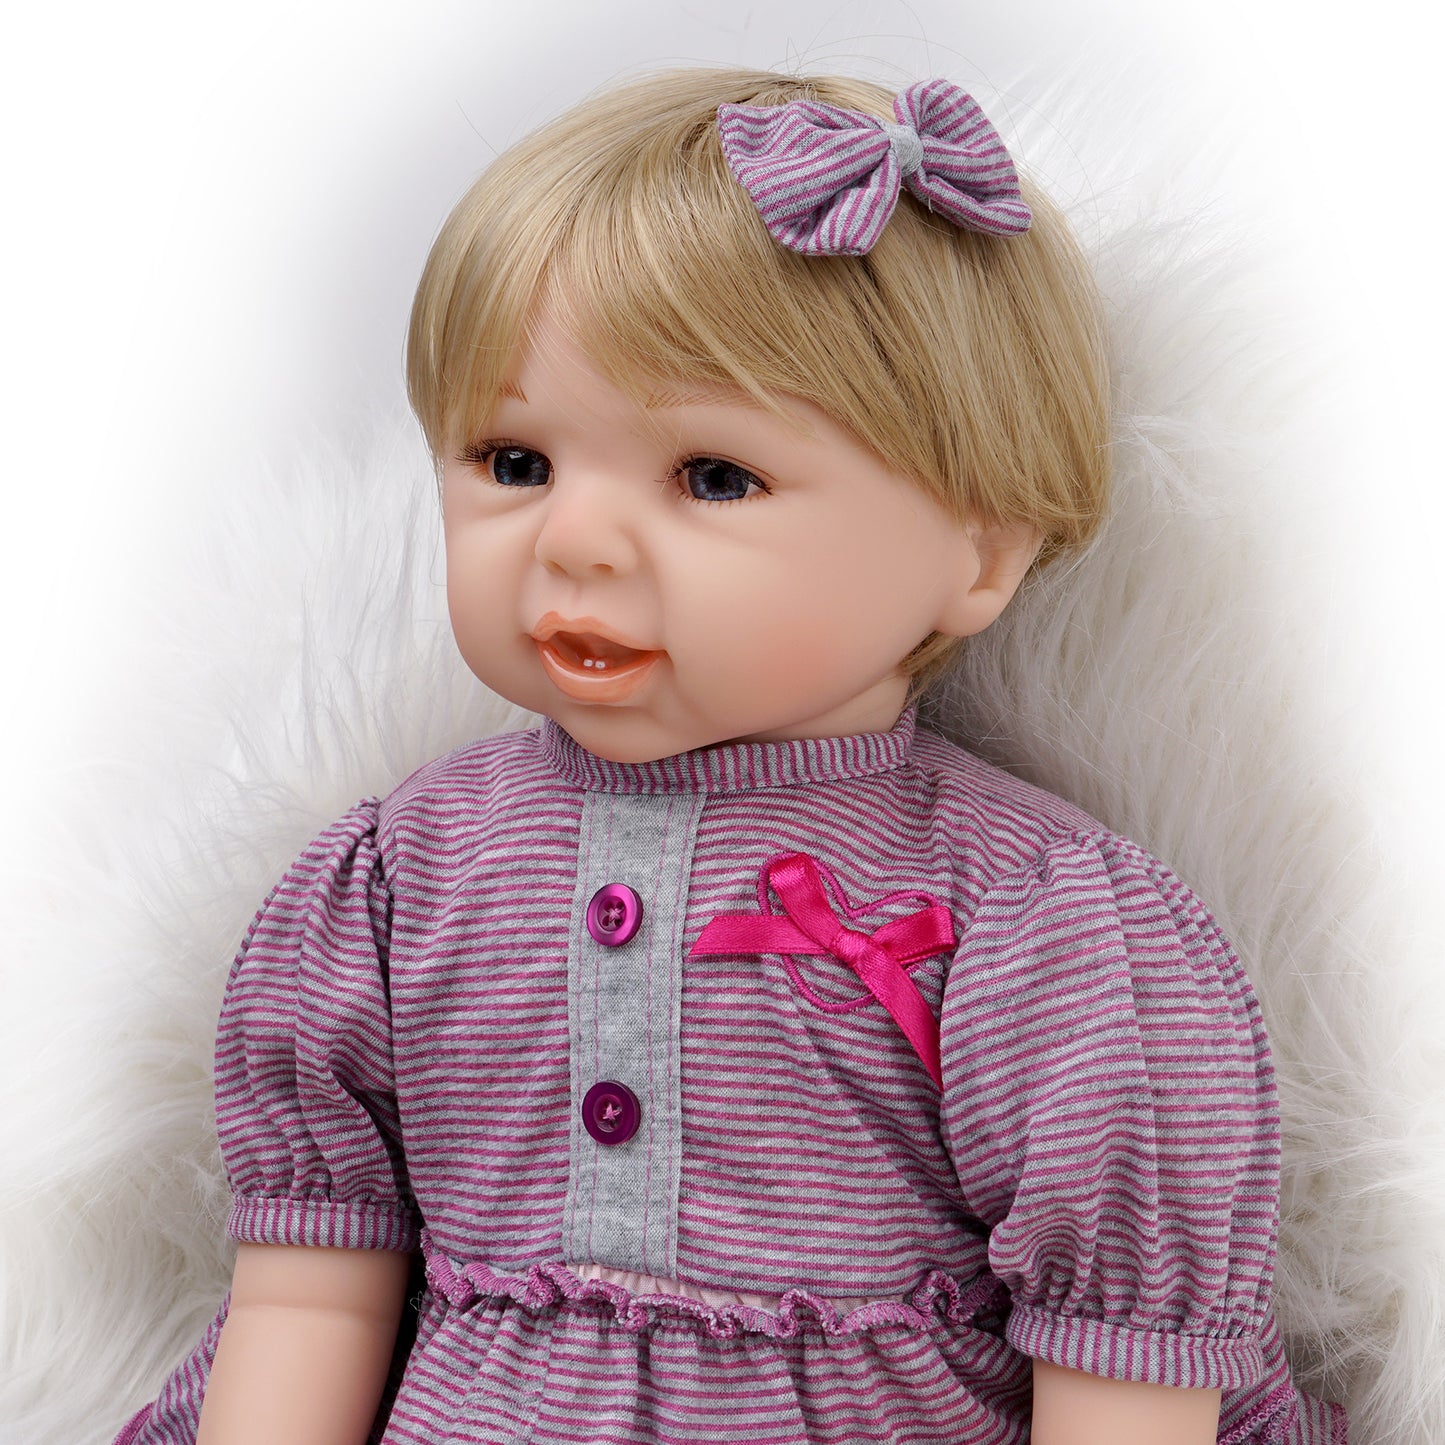 Lynne-Purple Striped Dress-22 Inch Realistic Reborn Baby Dolls Blue Eyes Blonde Hair